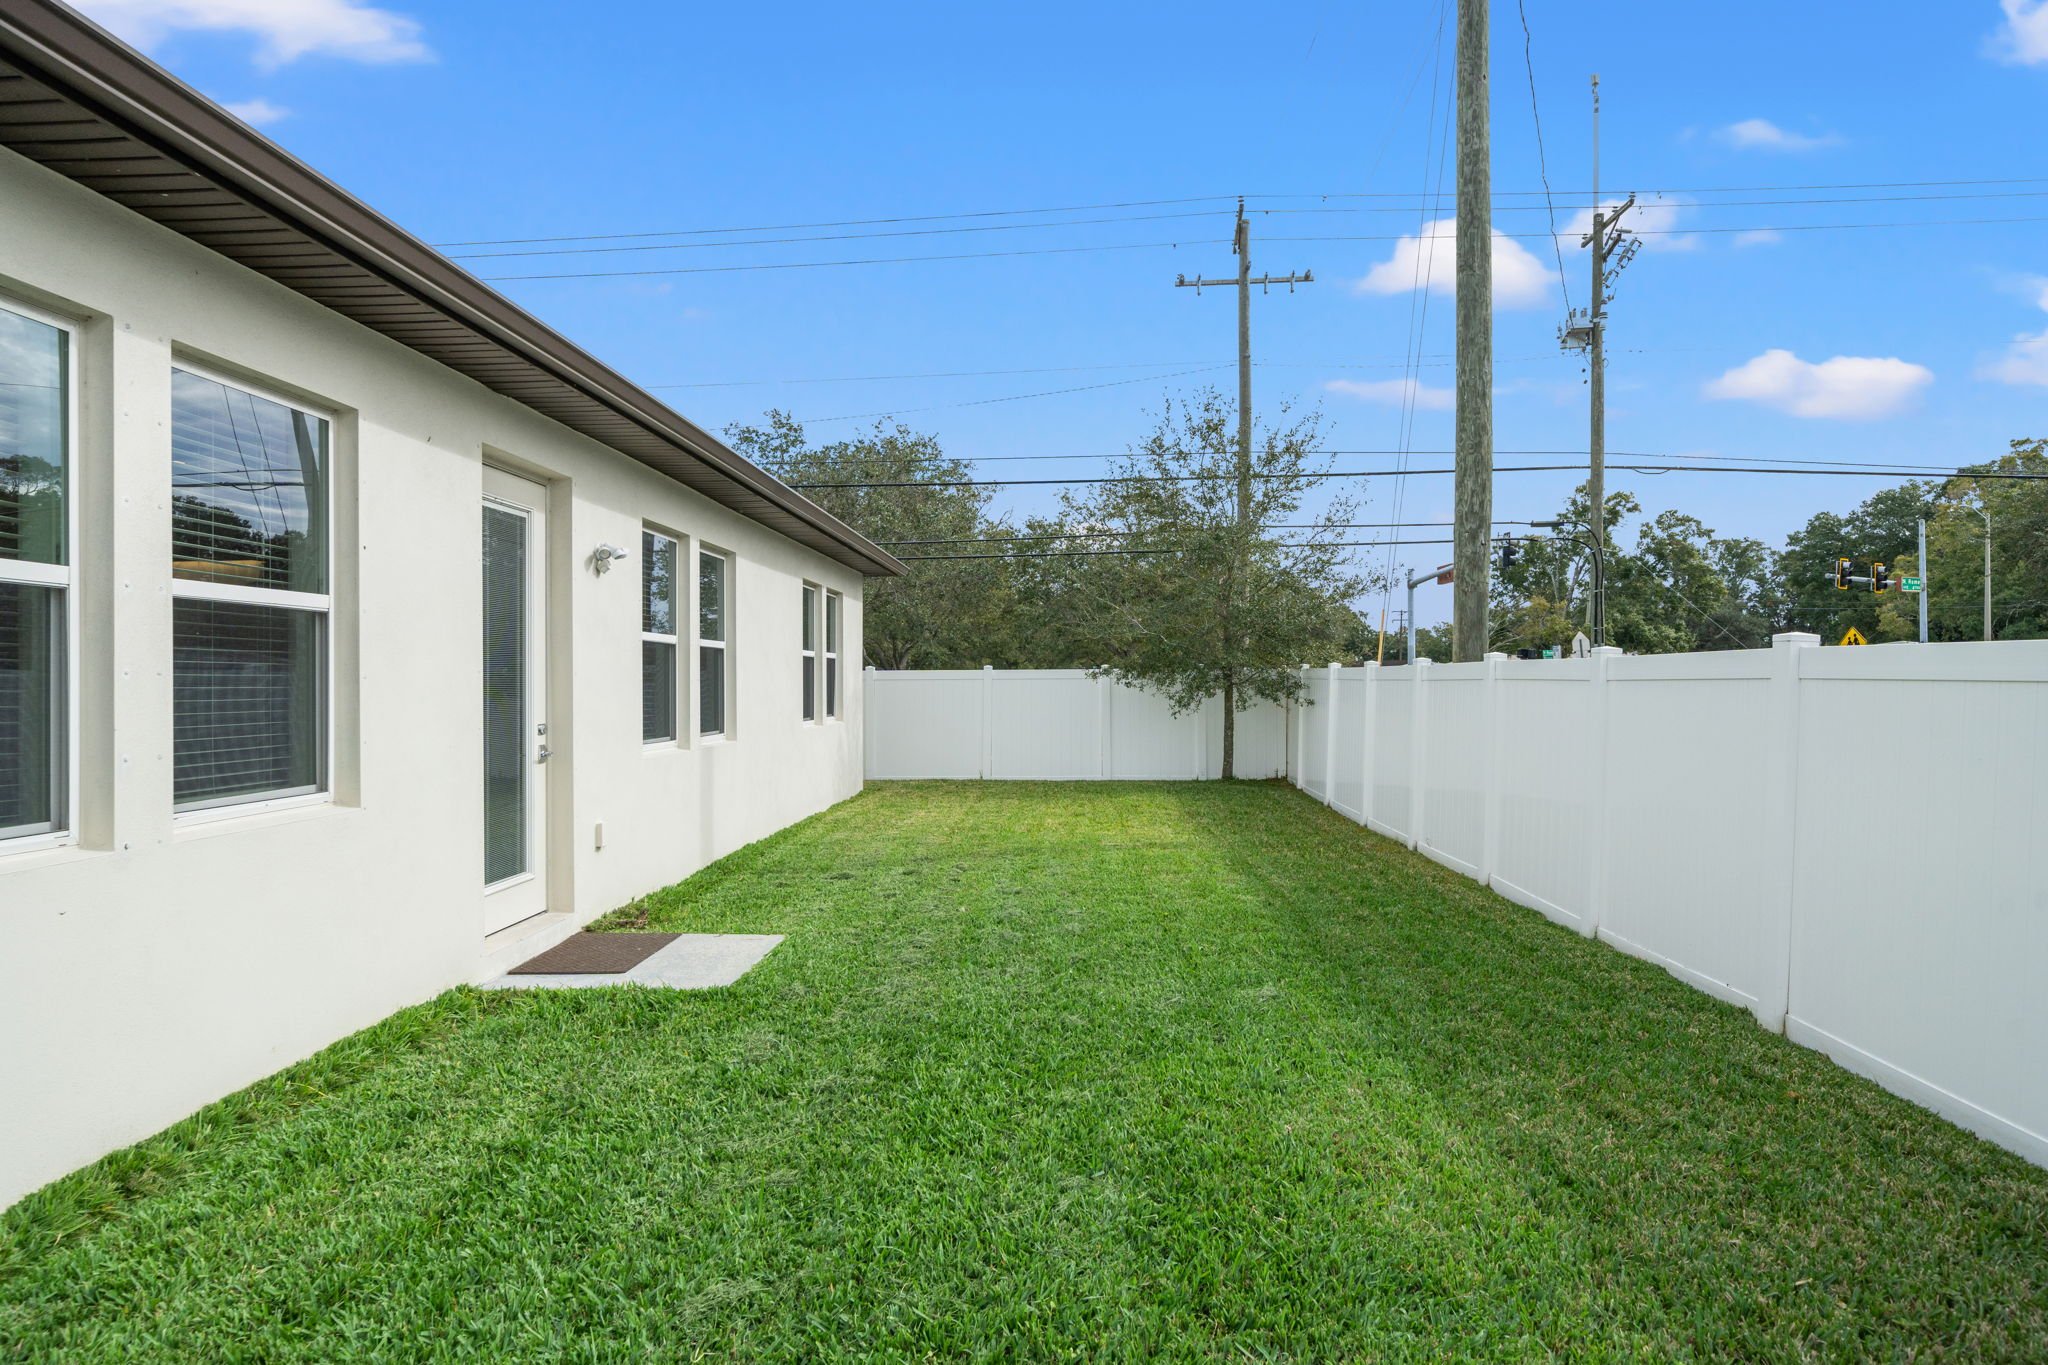 1702 W Louisiana Ave-Tampa-Wellswood-backyard.jpg